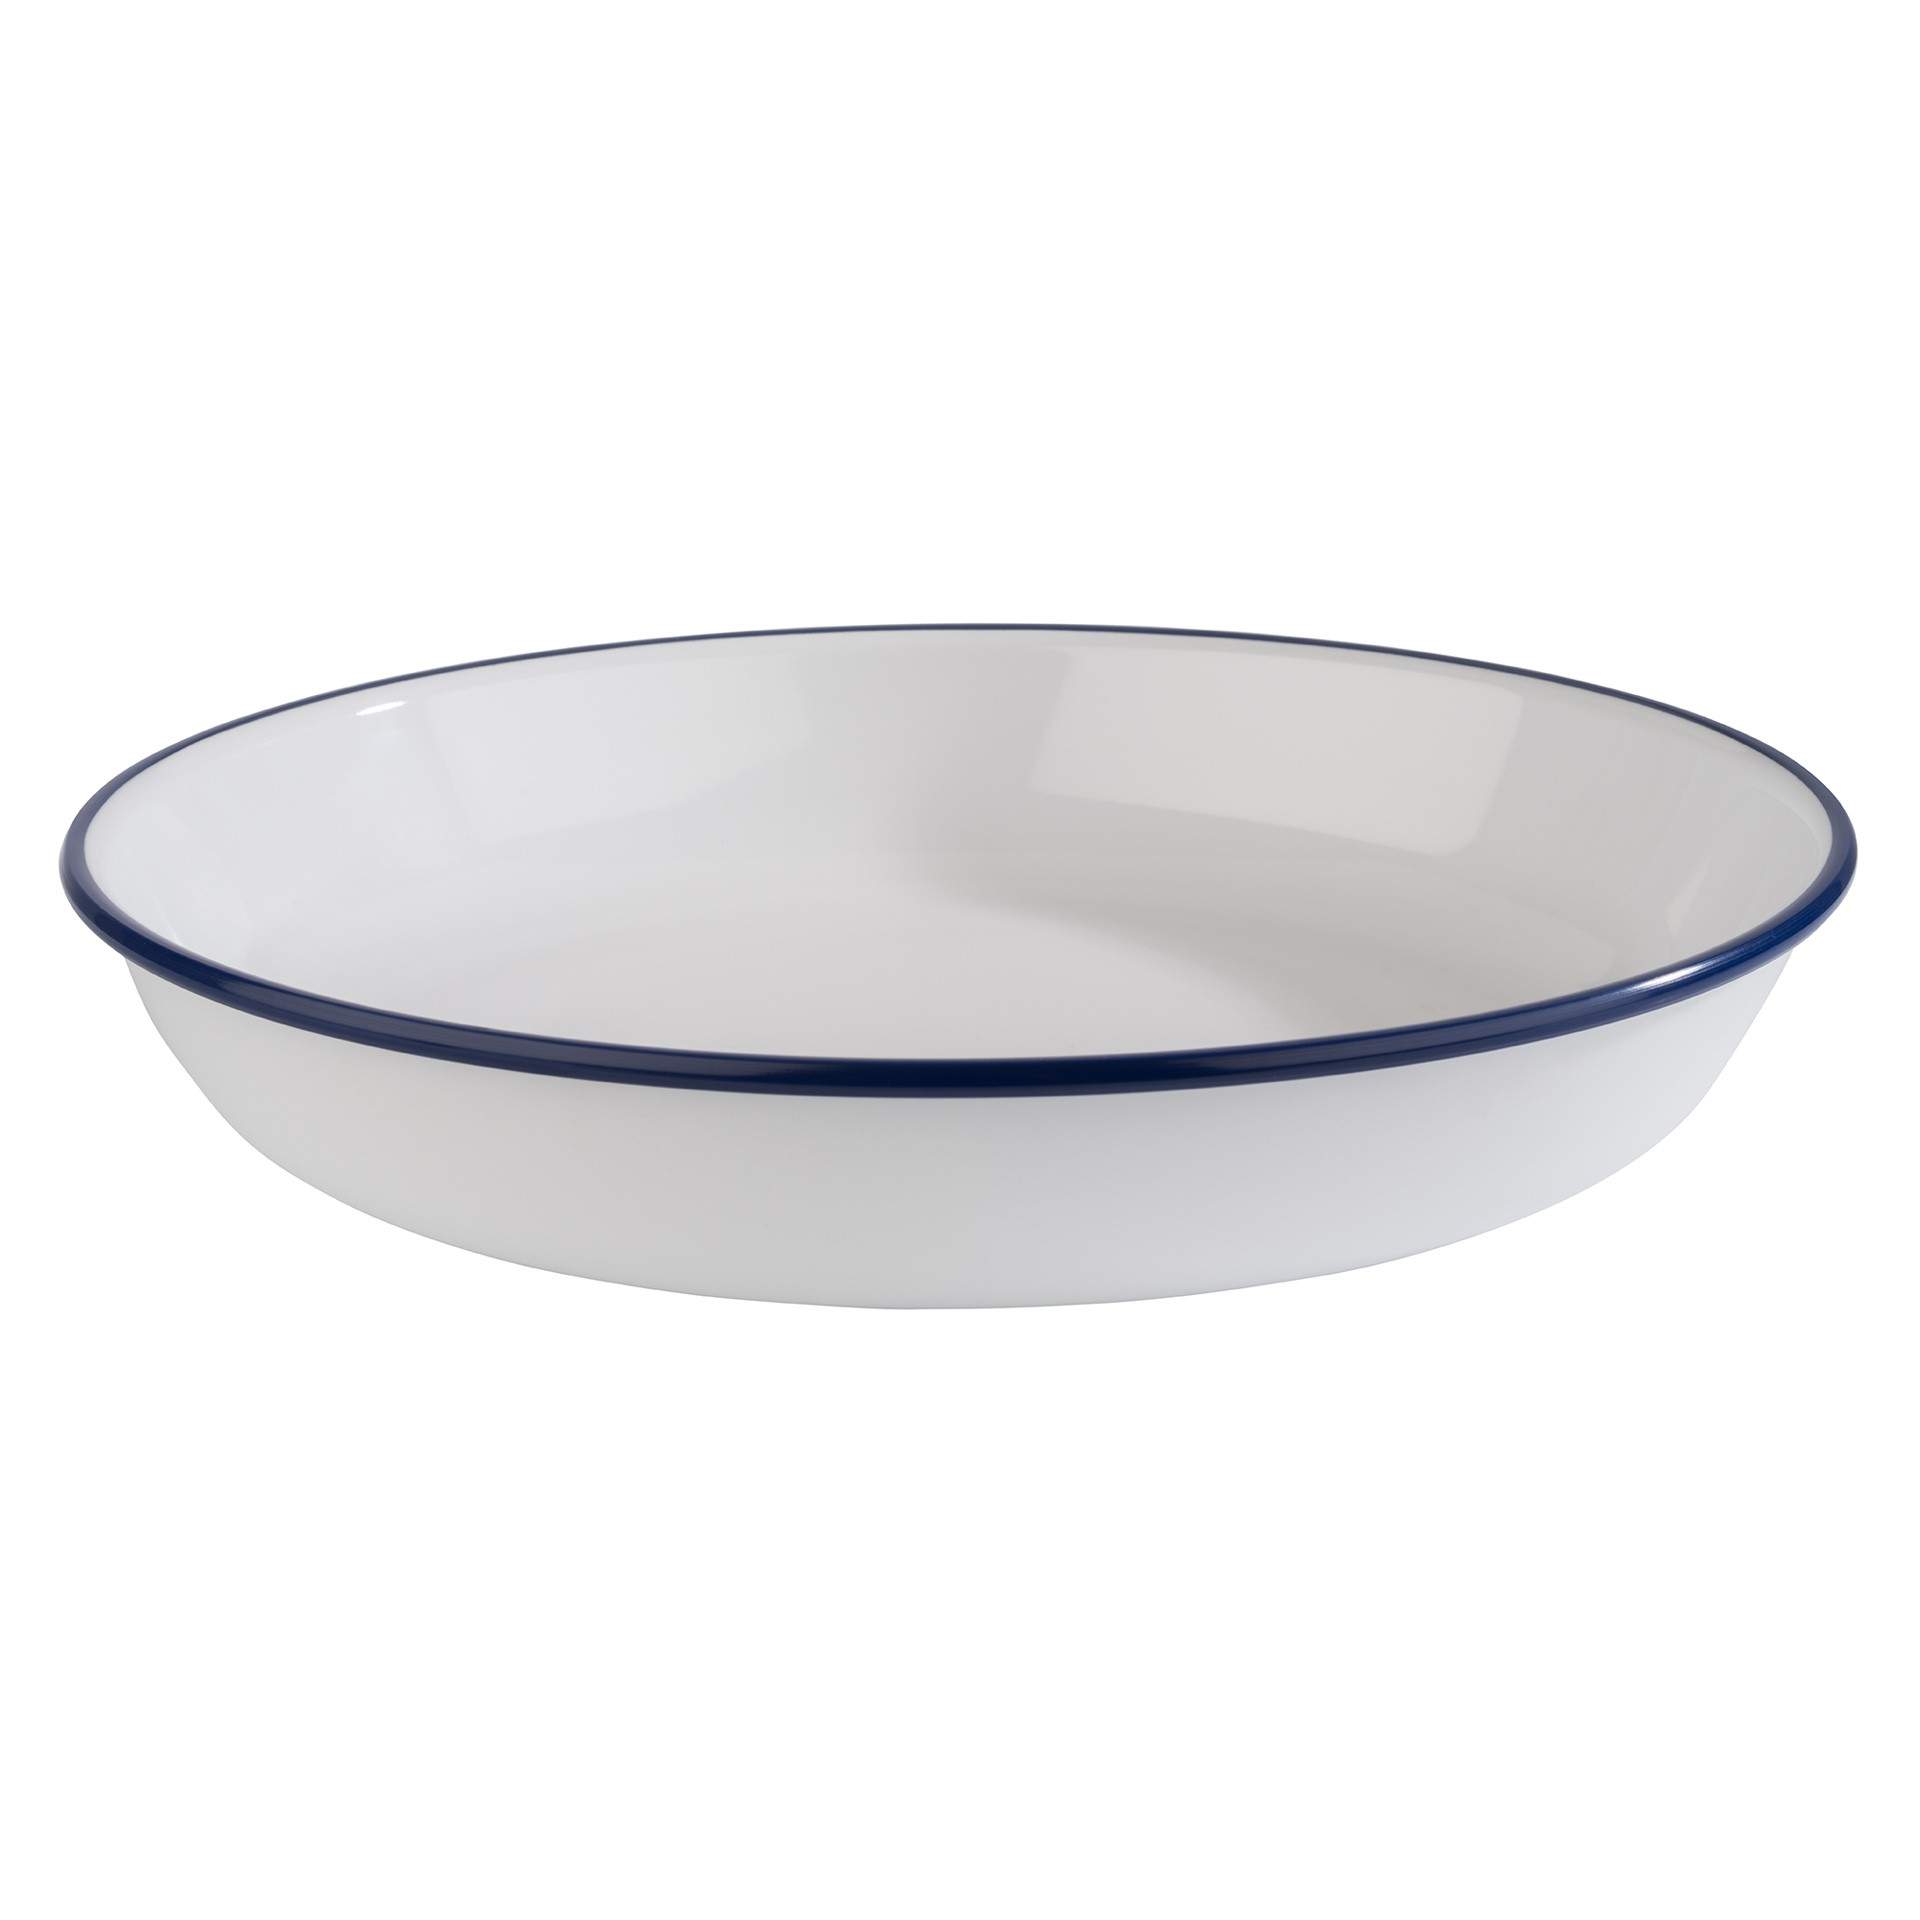 Suppenteller - Serie Enamel Look - weiß / blau - rund - Abm. 4,0 cm - Ø 24,5 cm - Melamin - 84954-B